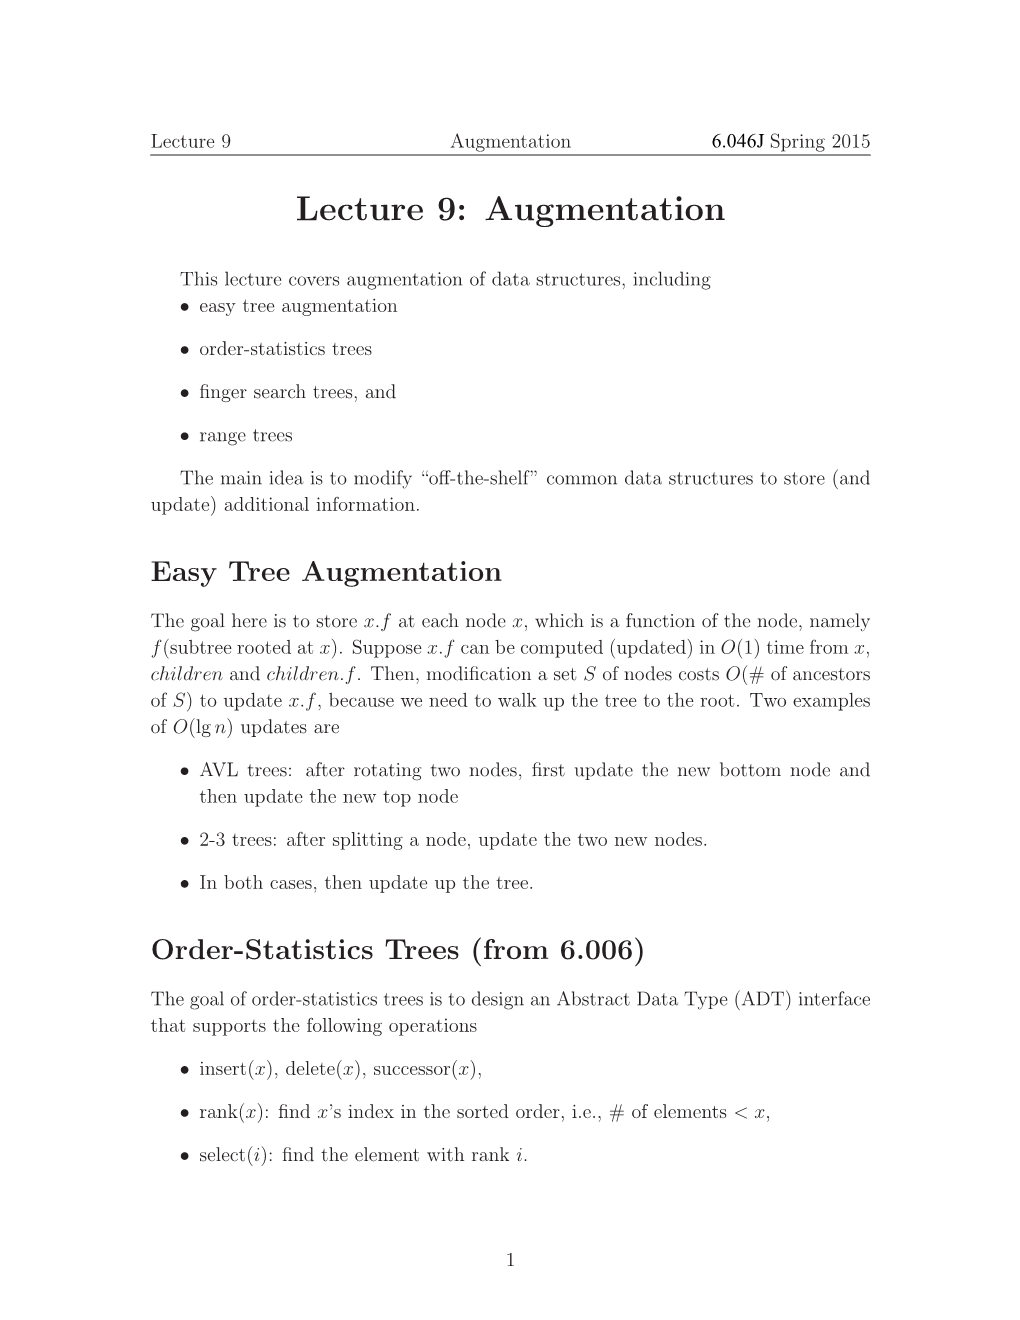 Augmentation: Range Trees (PDF)